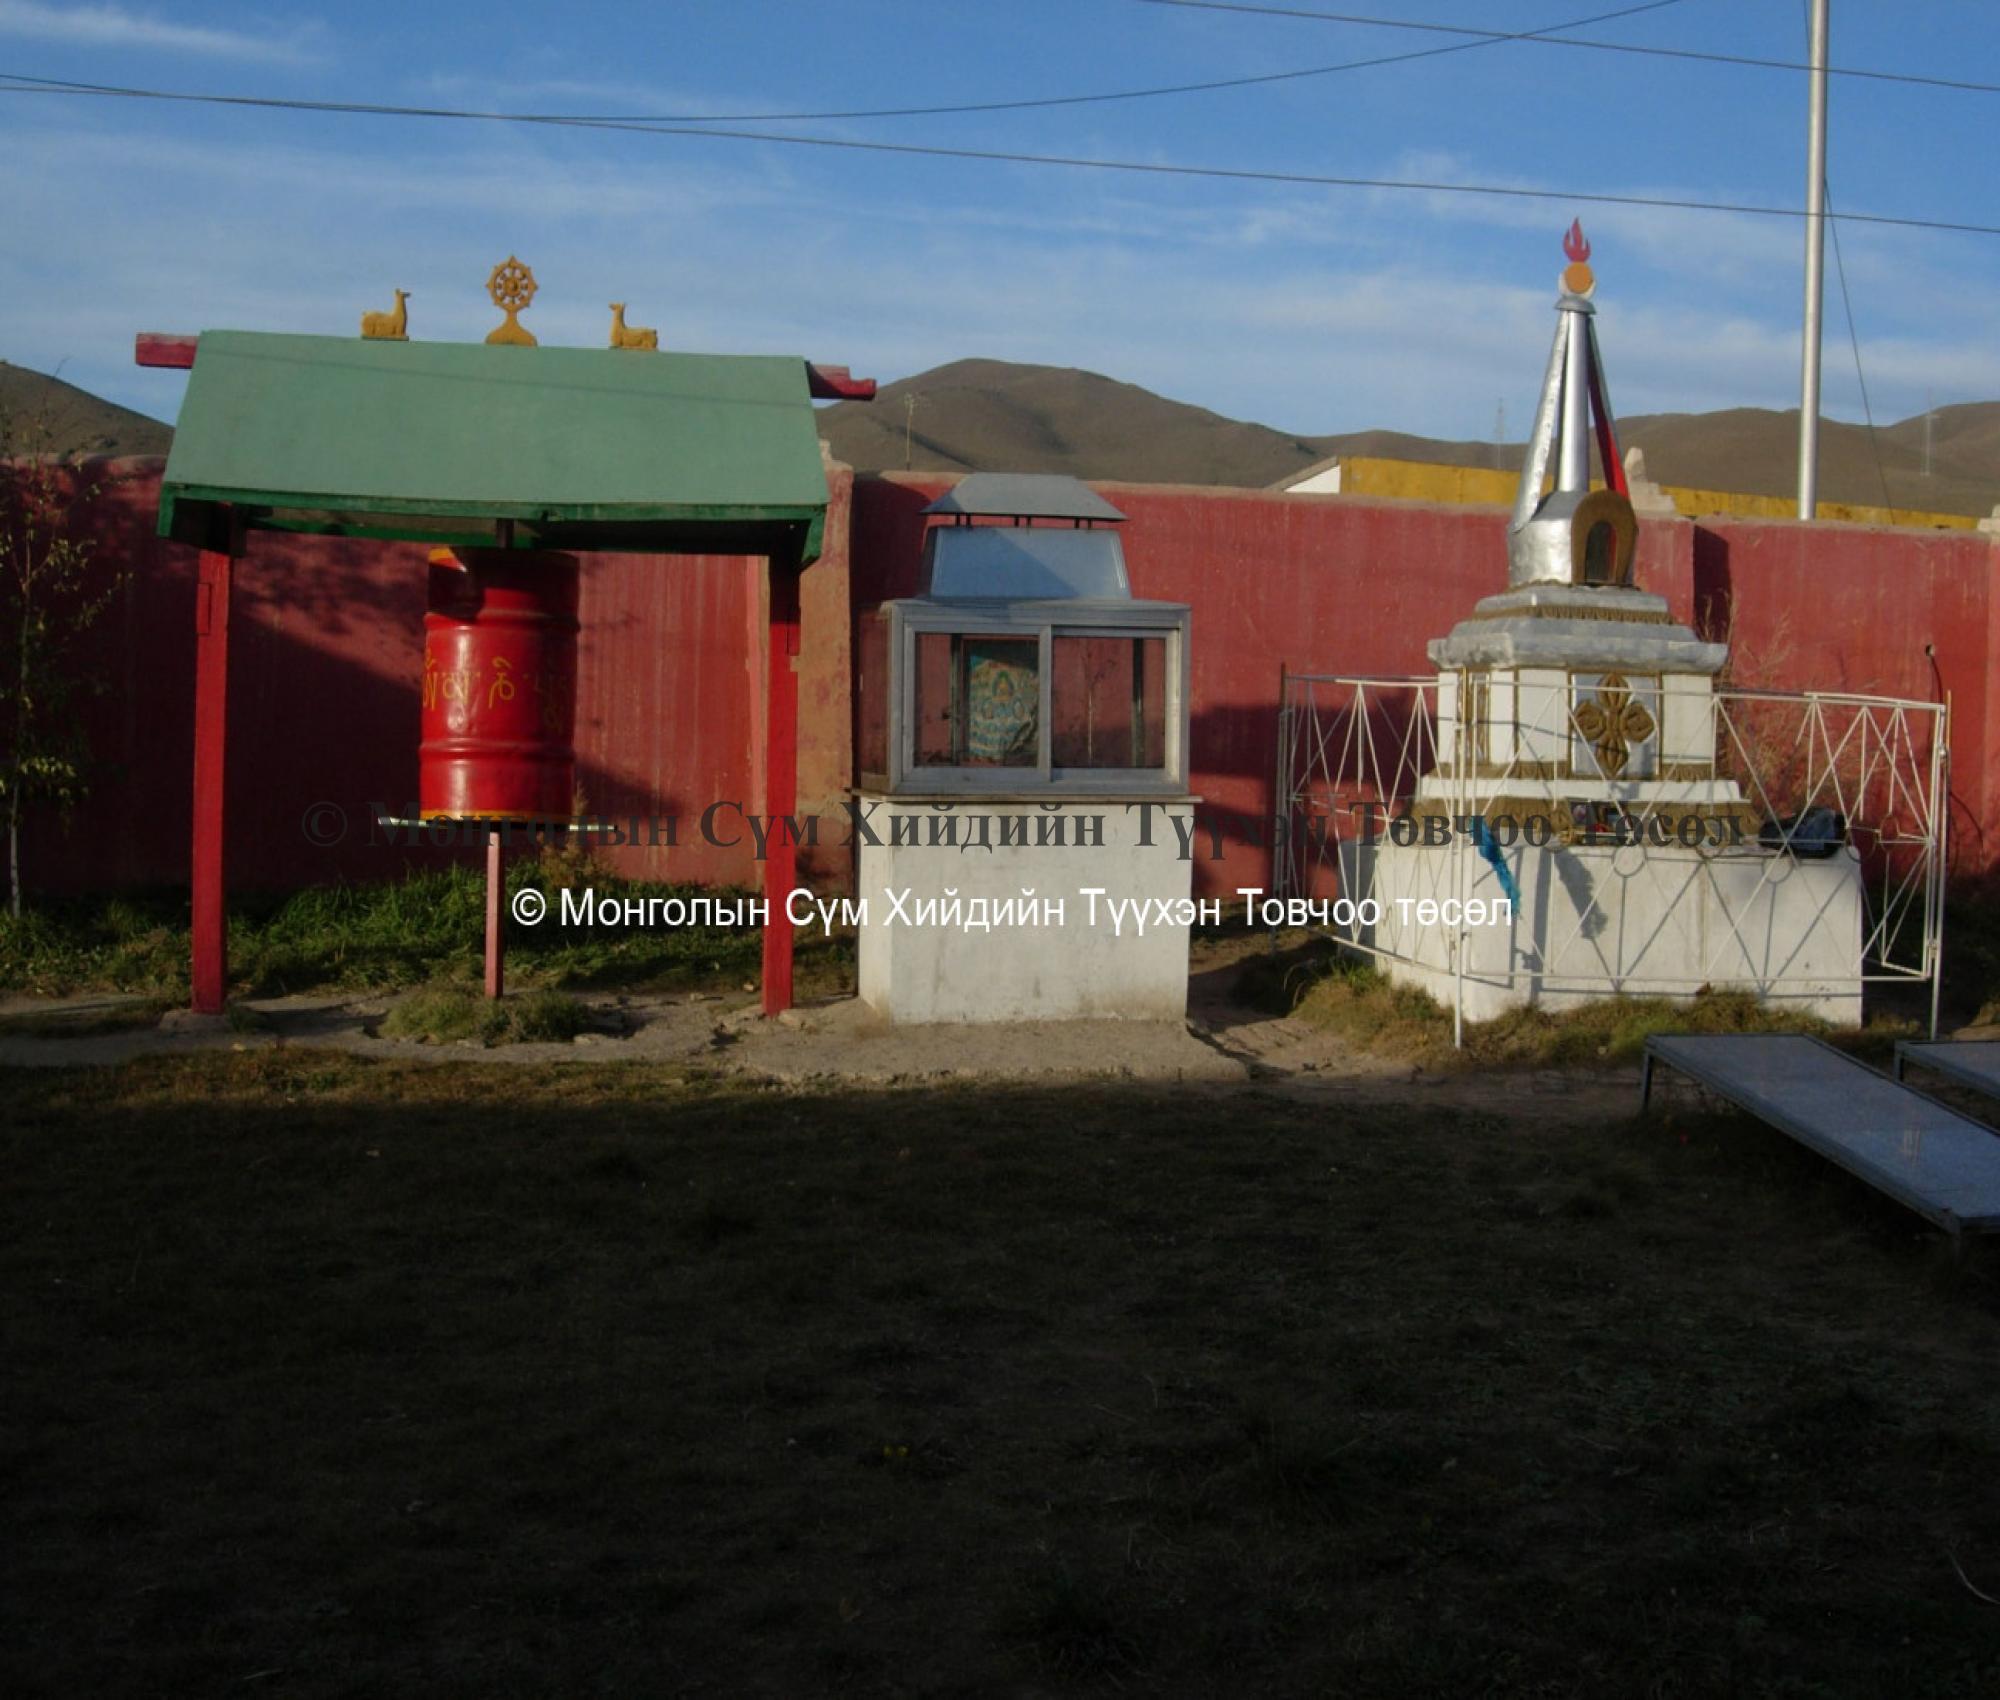 Stupa and prayer wheel on North wall